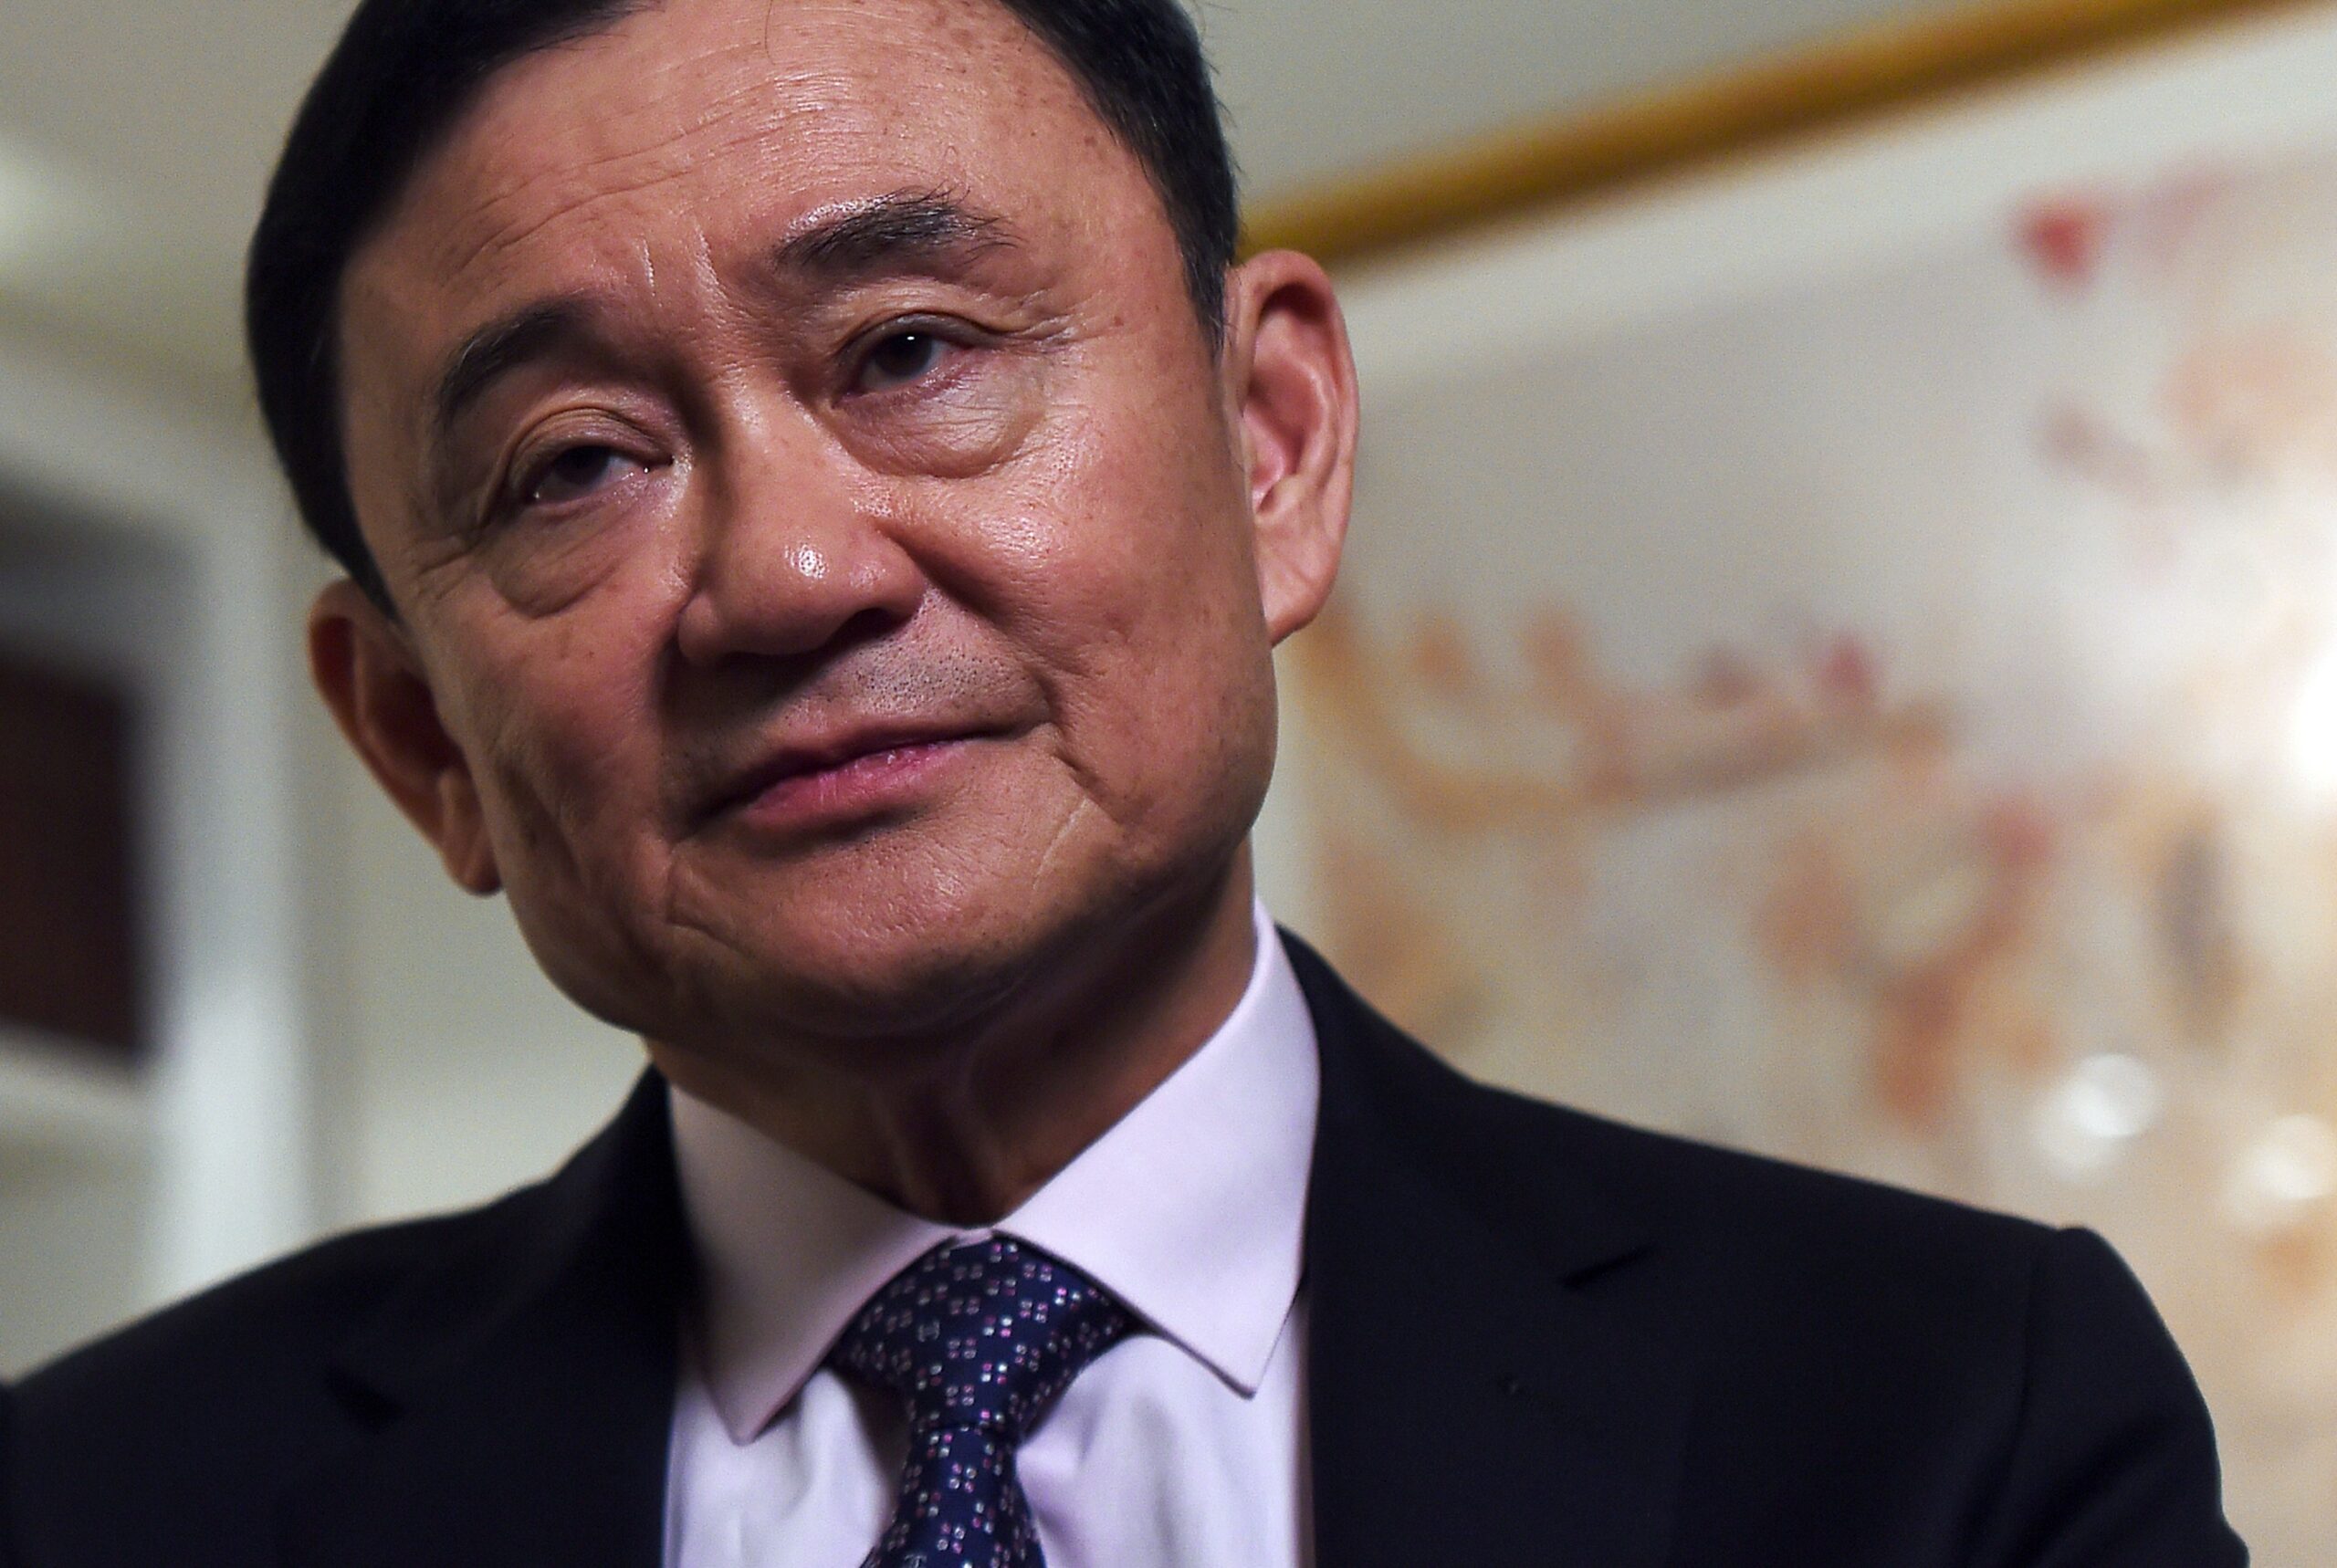 Former Thai premier Thaksin Shinawatra